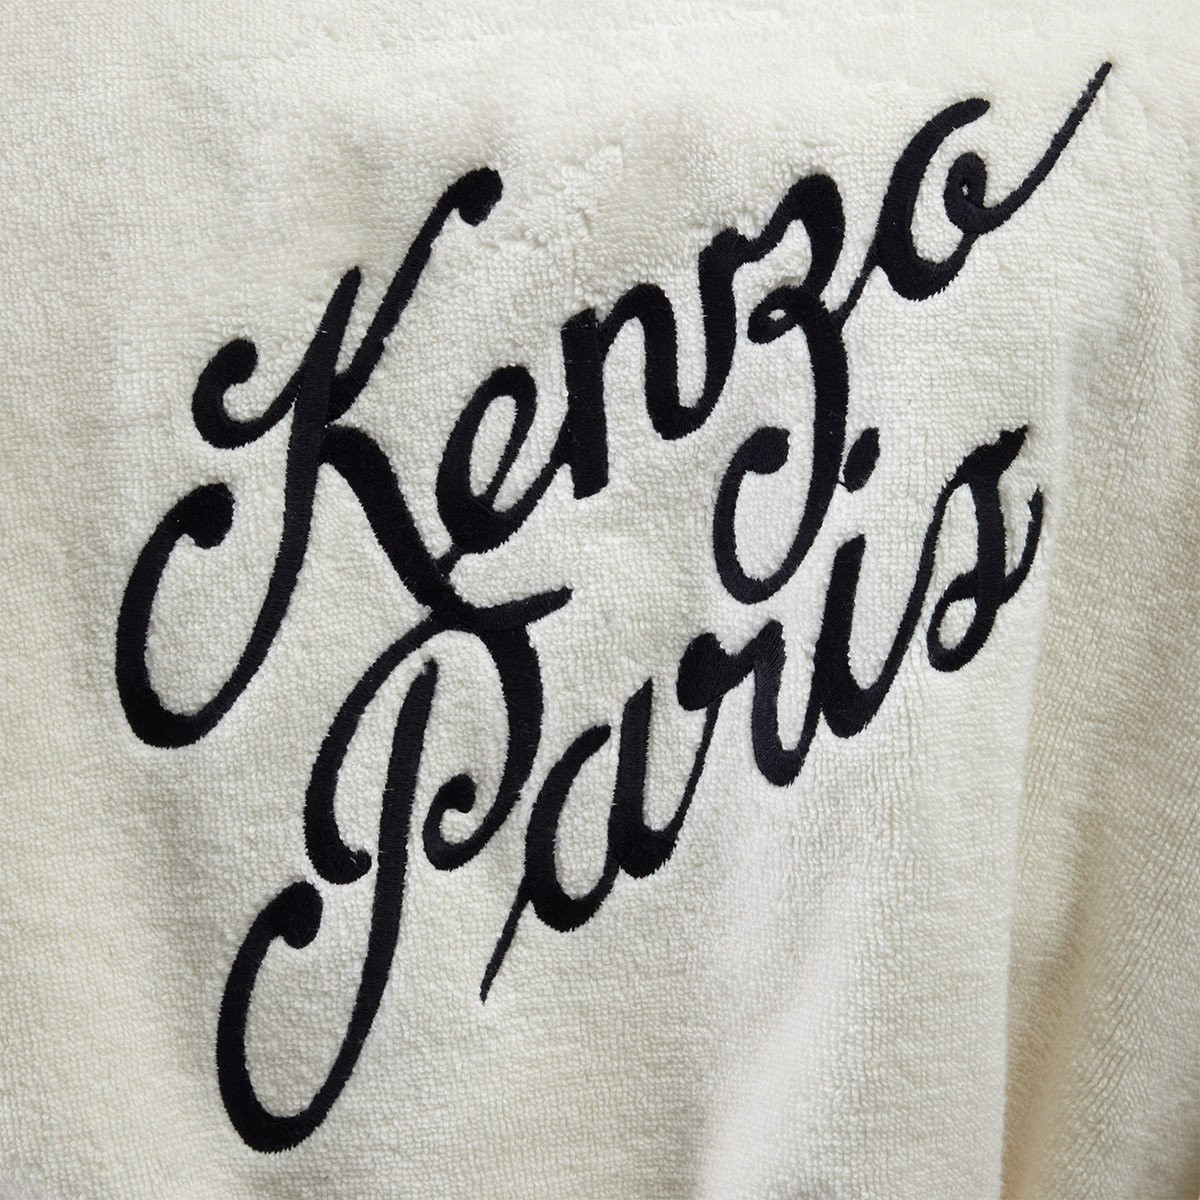 халат кимоно Kenzo Varsity - купить в магазине Yves Delorme Russia